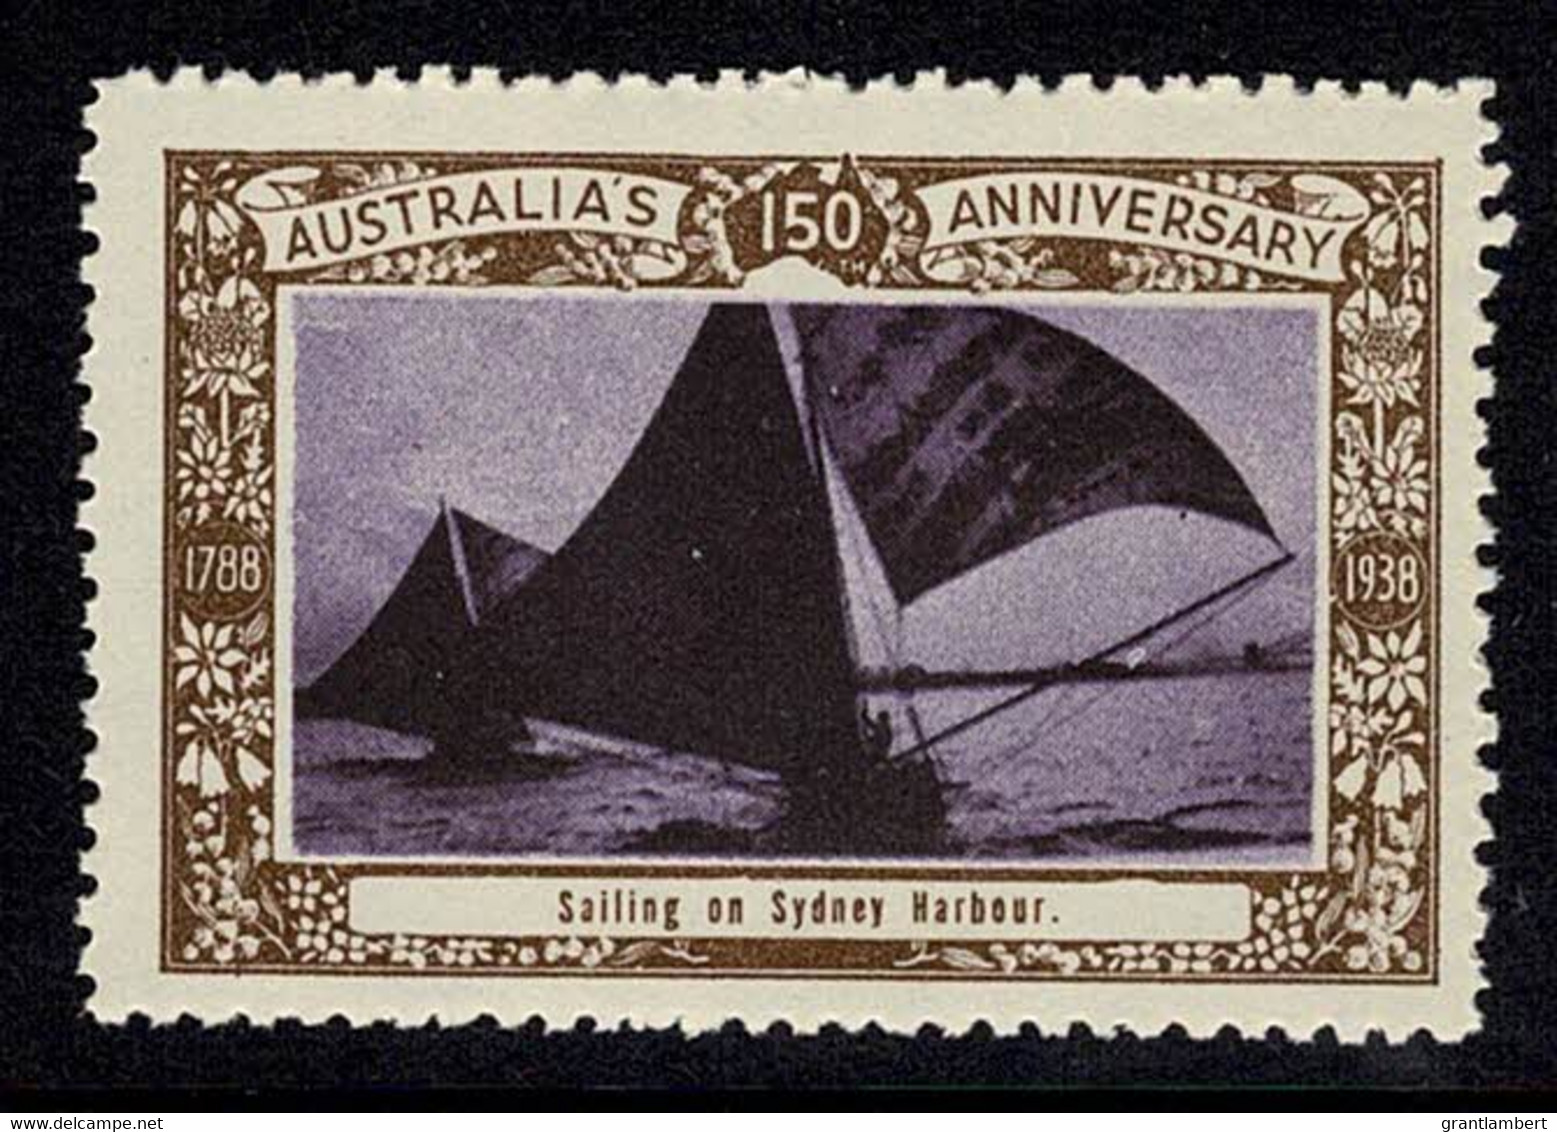 Australia 1938 Sailing On Sydney Harbour - NSW 150th Anniversary Cinderella MNH - Cinderellas